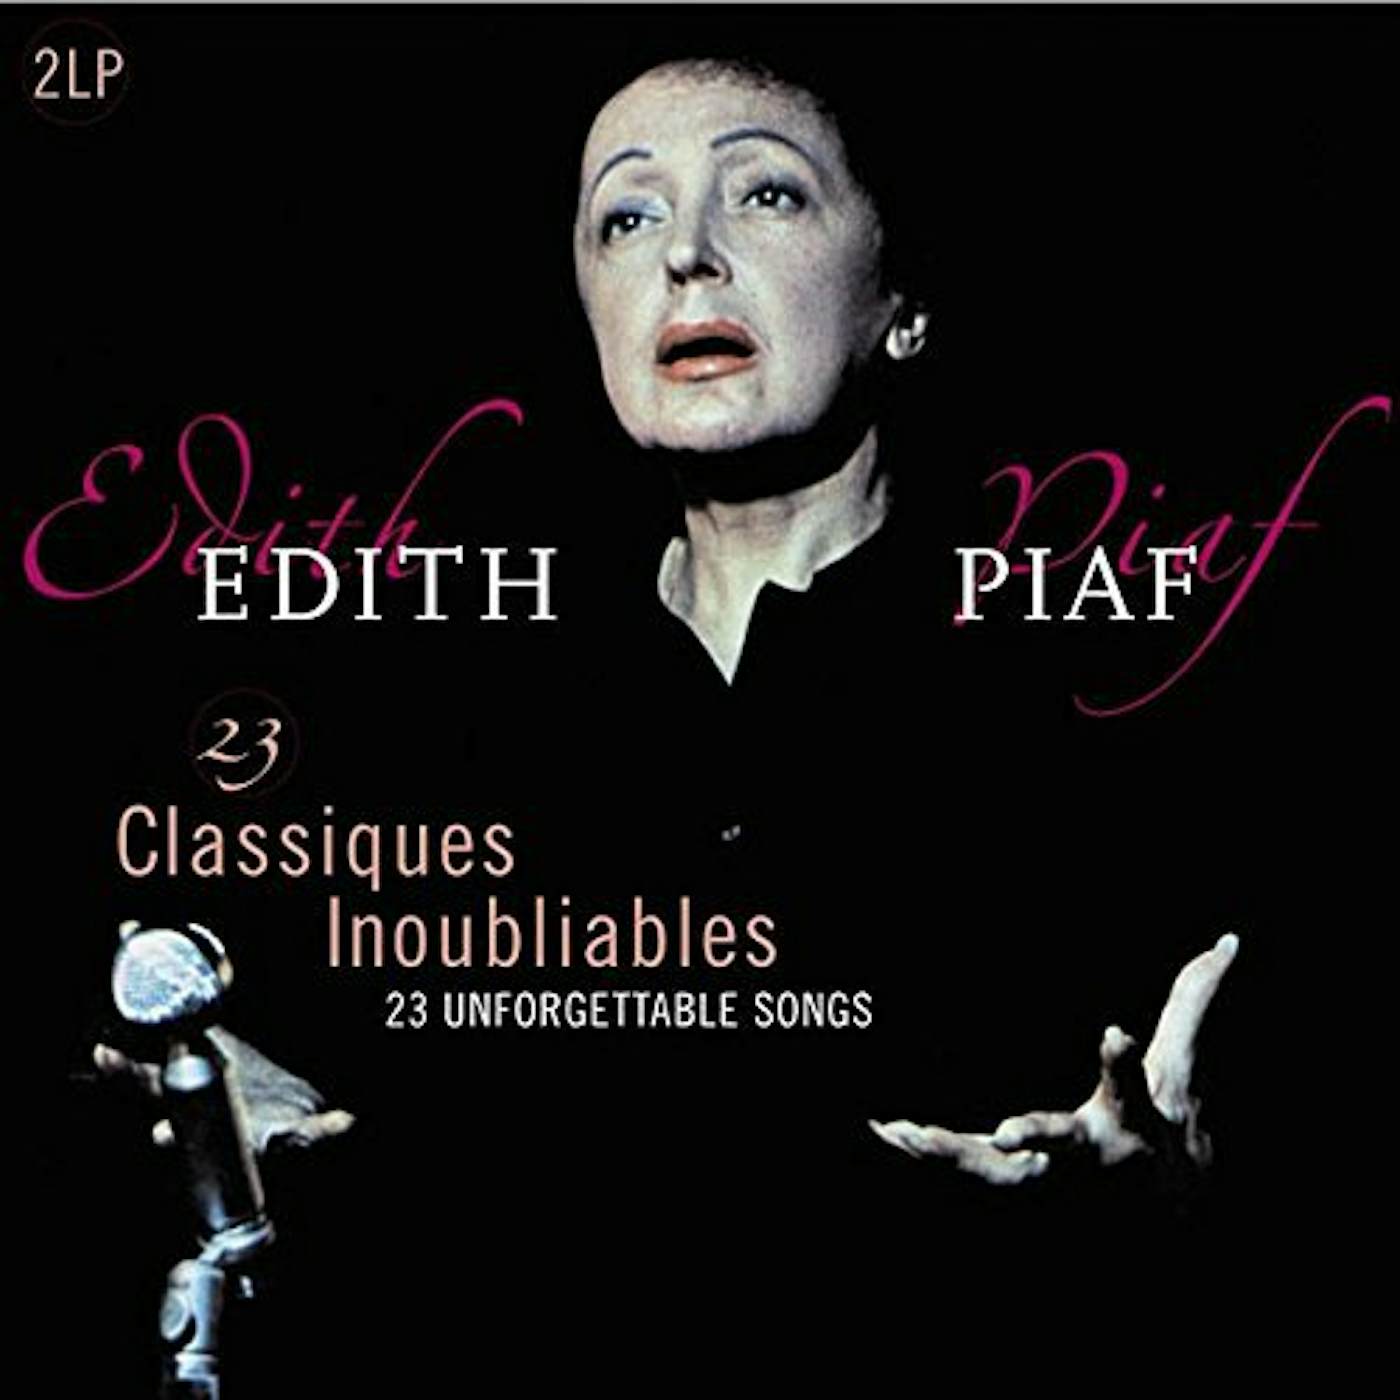 Édith Piaf 23 CLASSIQUES INOUBLIABLES (UNFORGETTABLE CLASSICS Vinyl Record